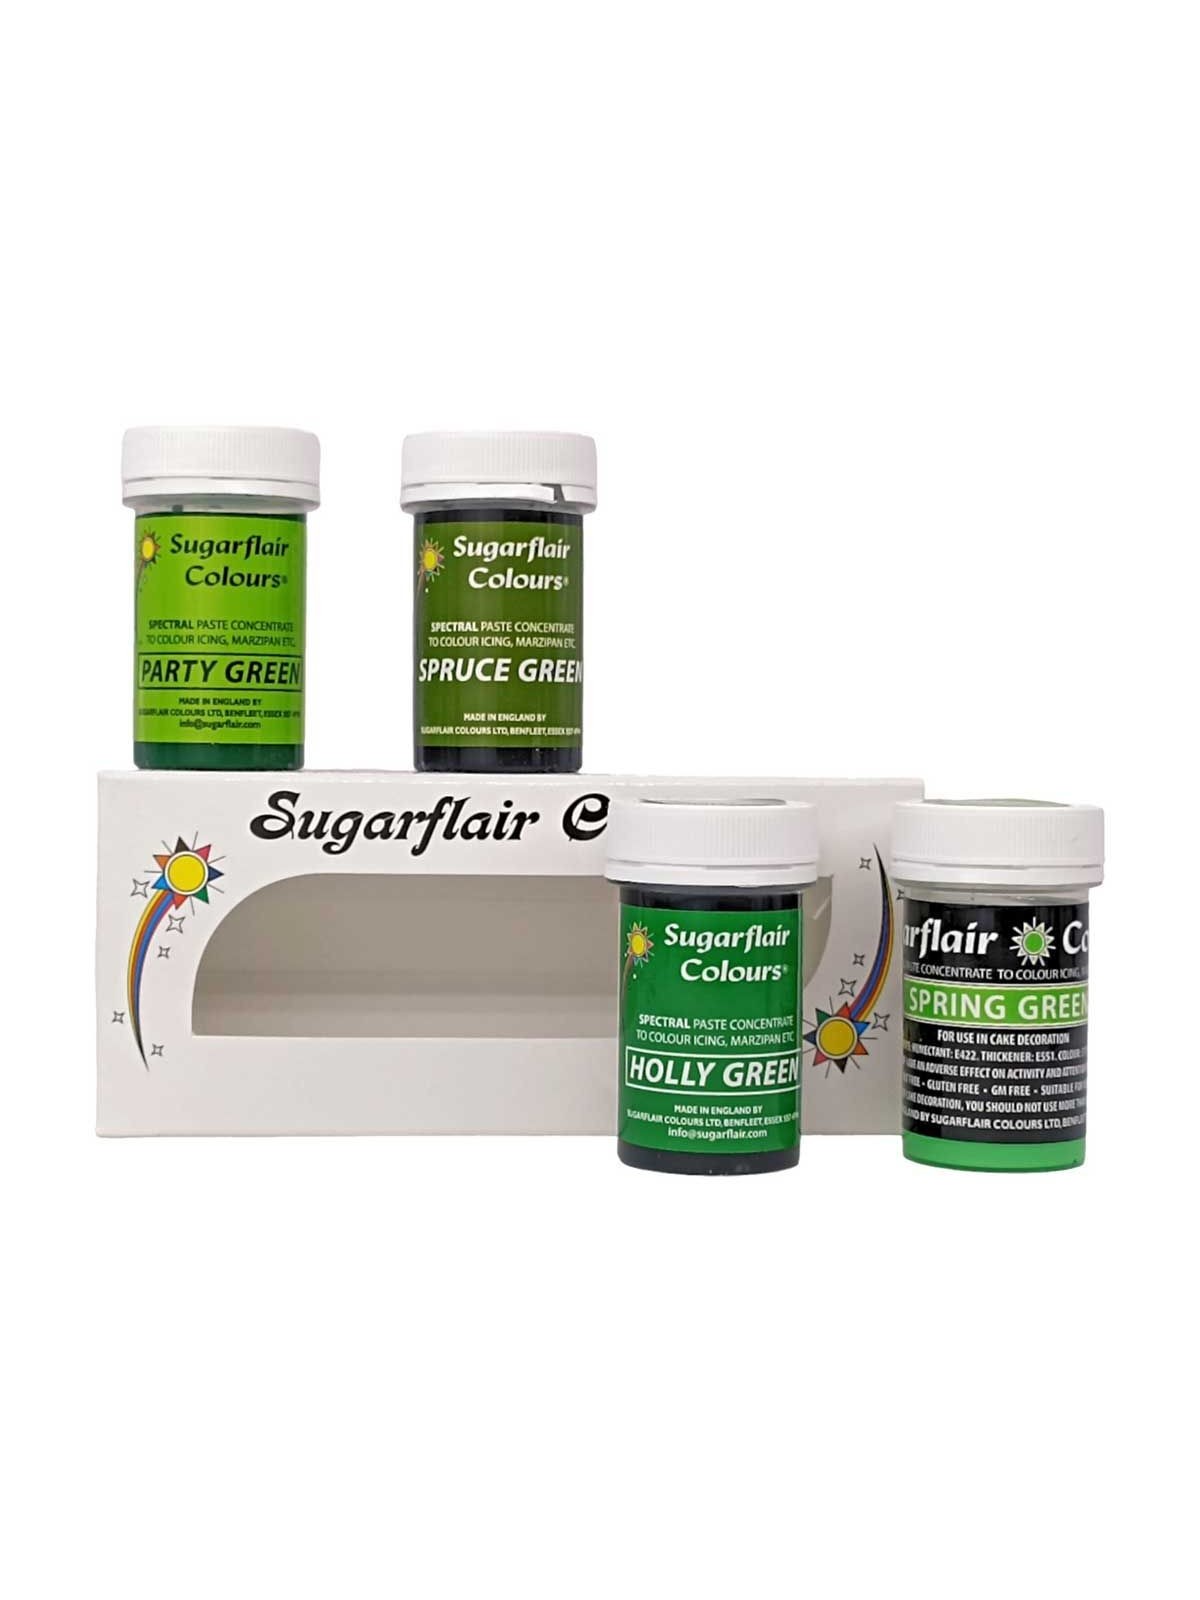 Sugarflair paste colour mixed Green set - 4 x 25g